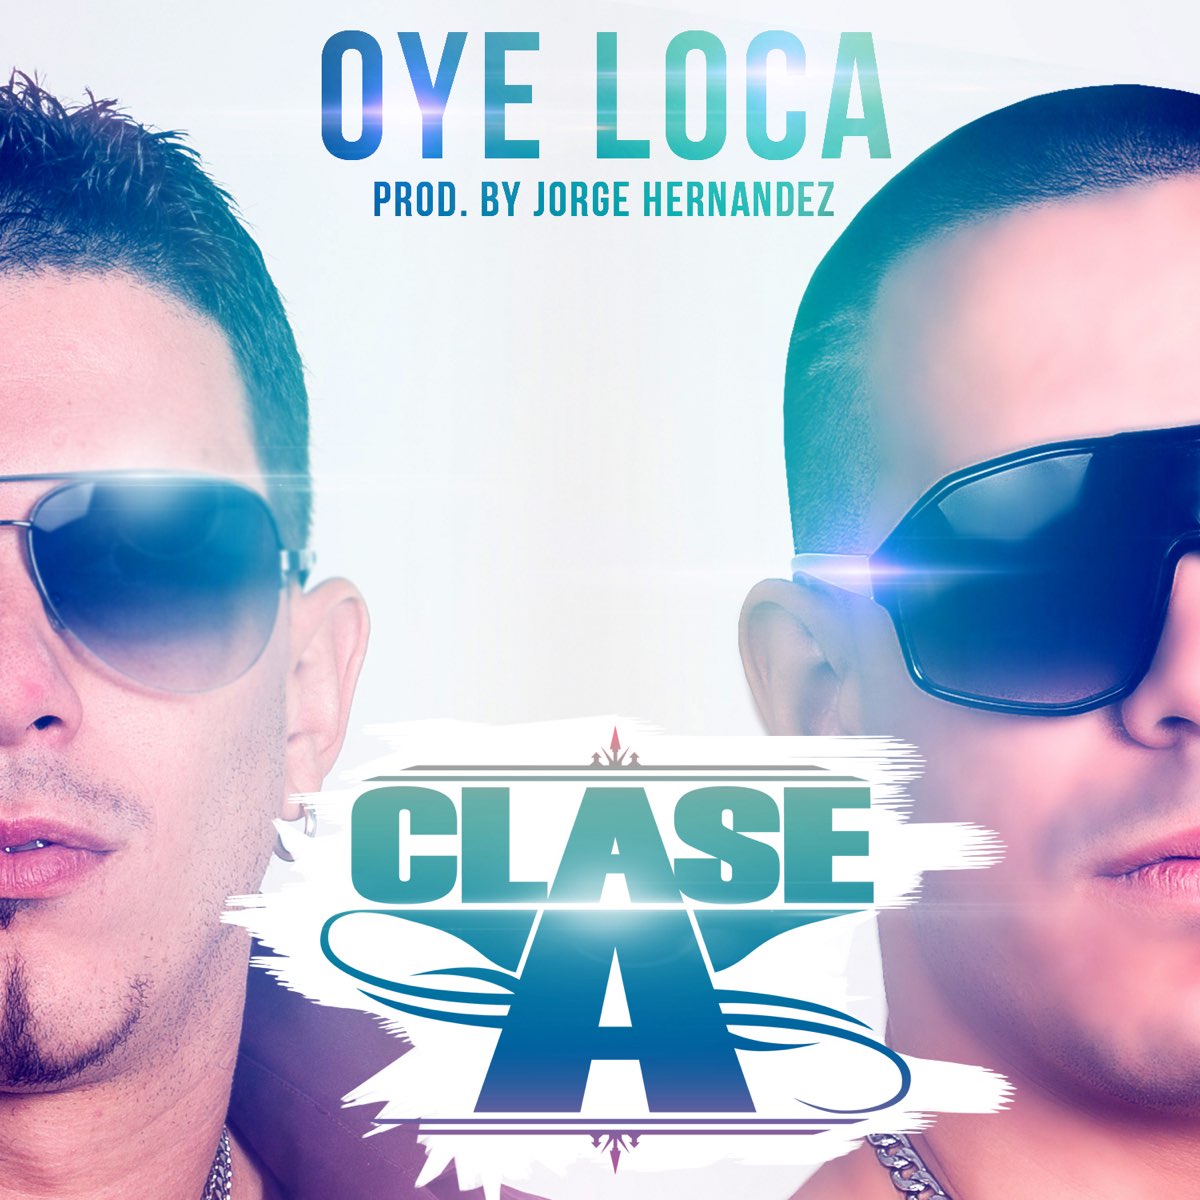 ‎oye Loca Single By Clase A On Apple Music